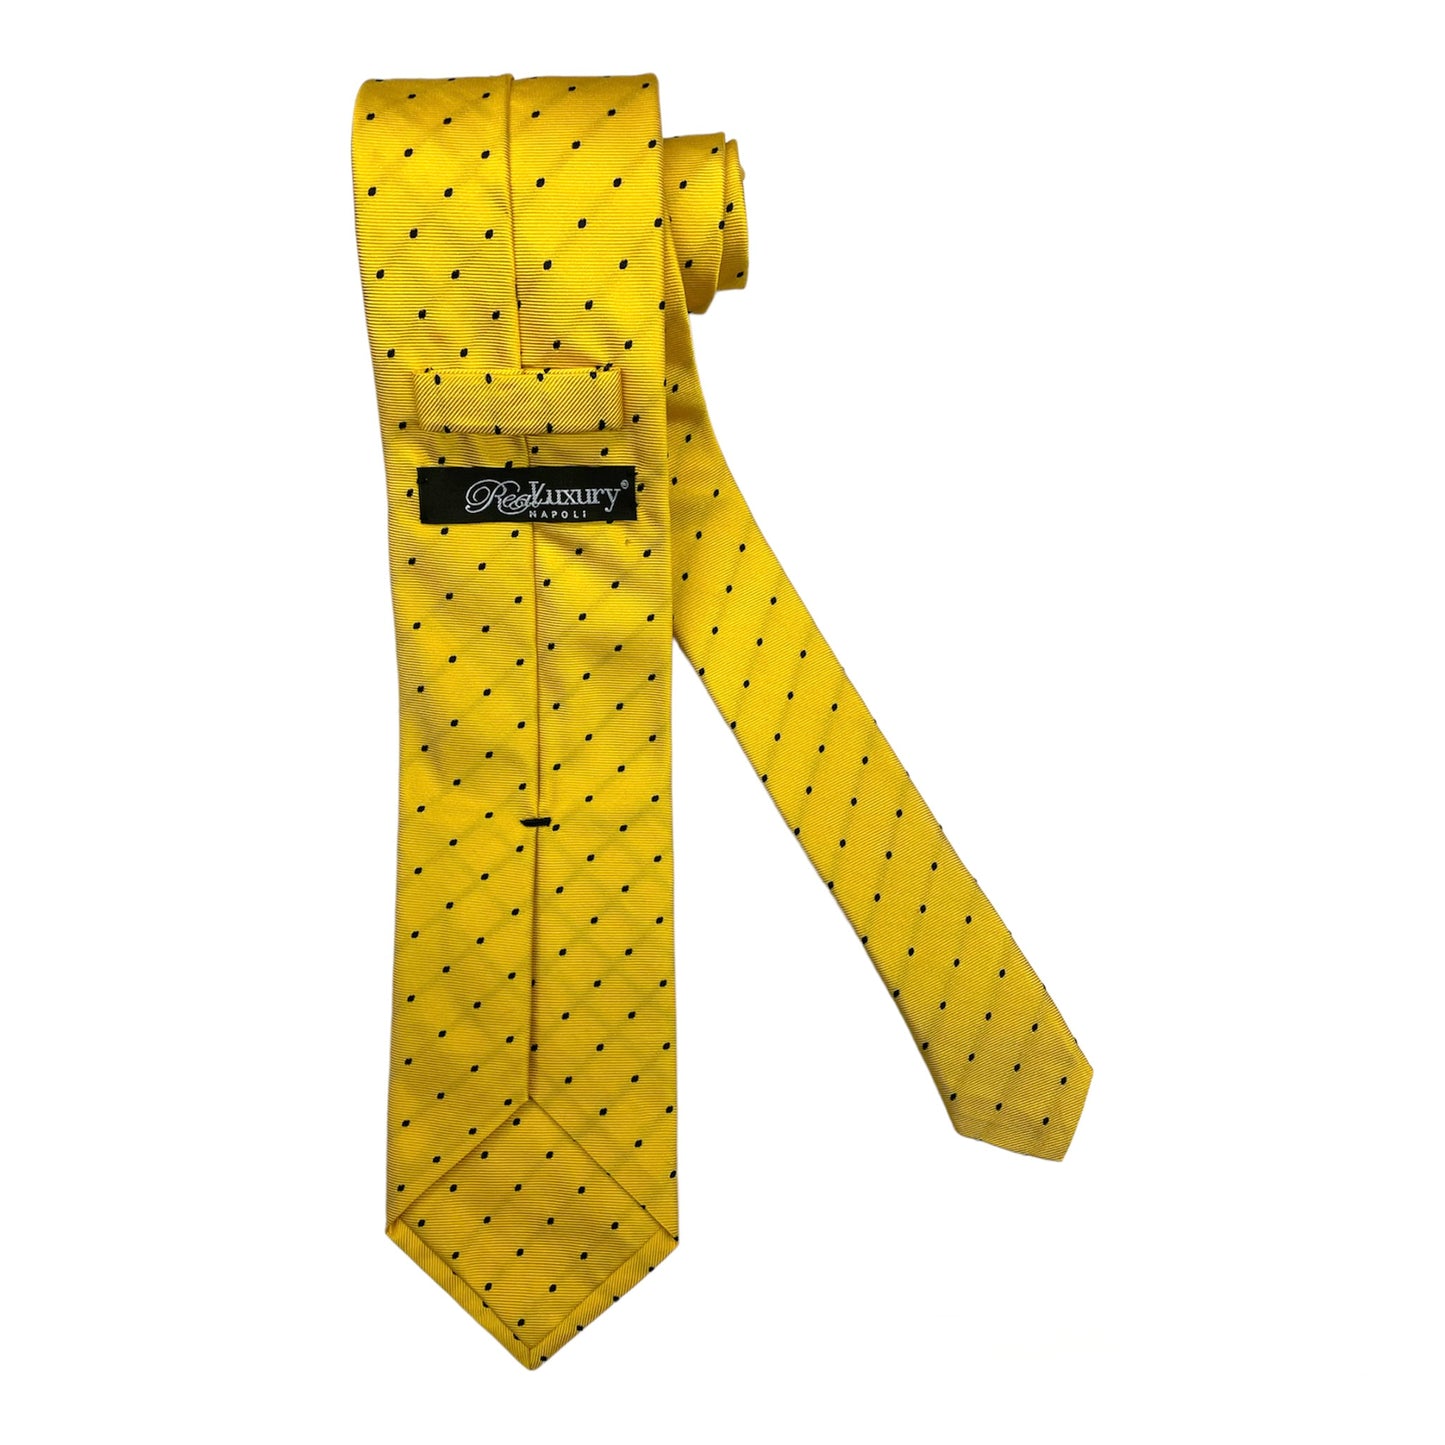 Cravatta seta gialla con pois blu